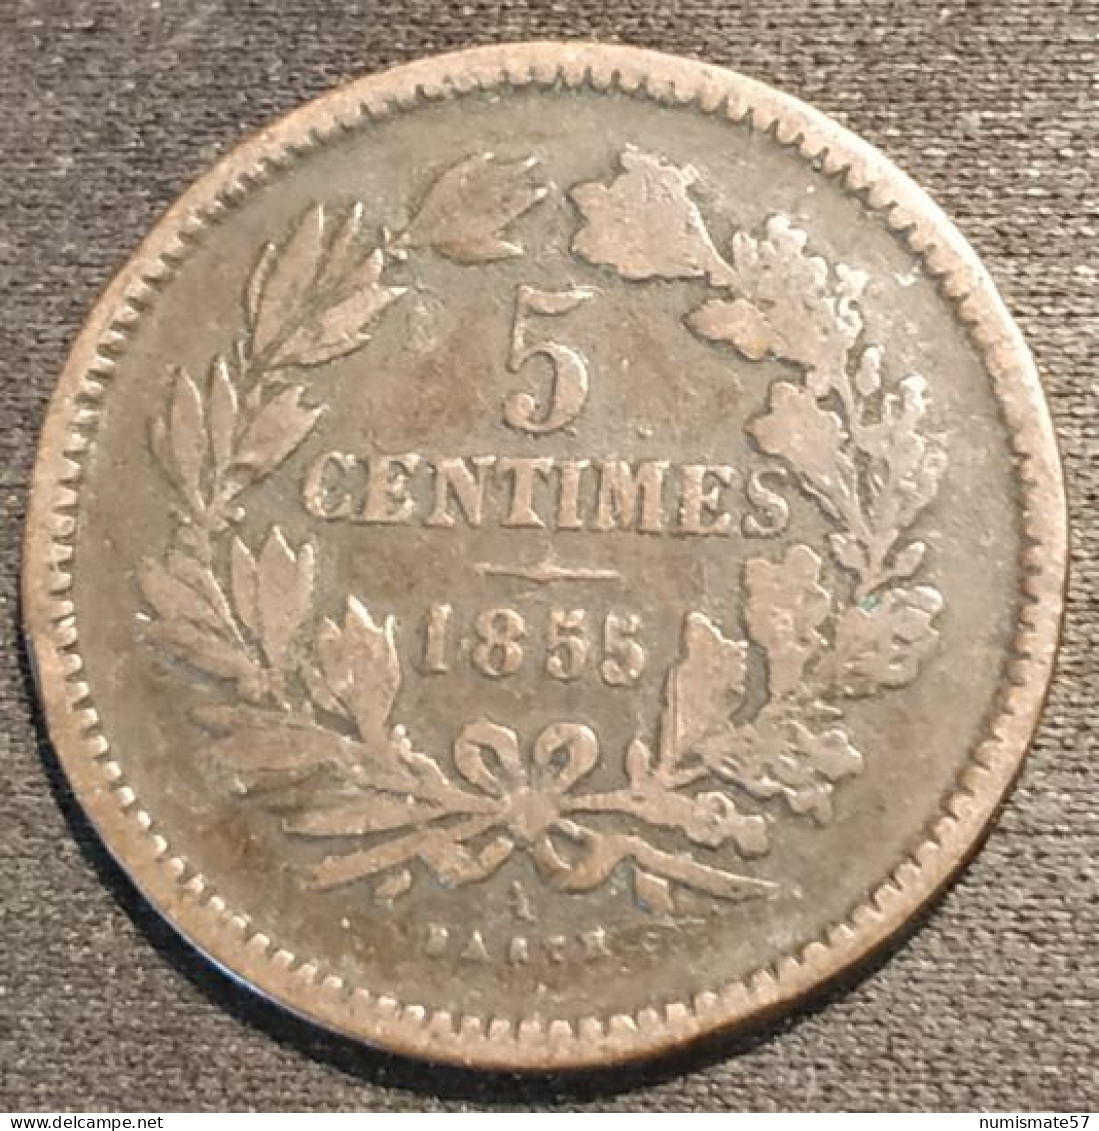 LUXEMBOURG - 5 CENTIMES 1855 - Guillaume III - KM 22 - Luxemburgo